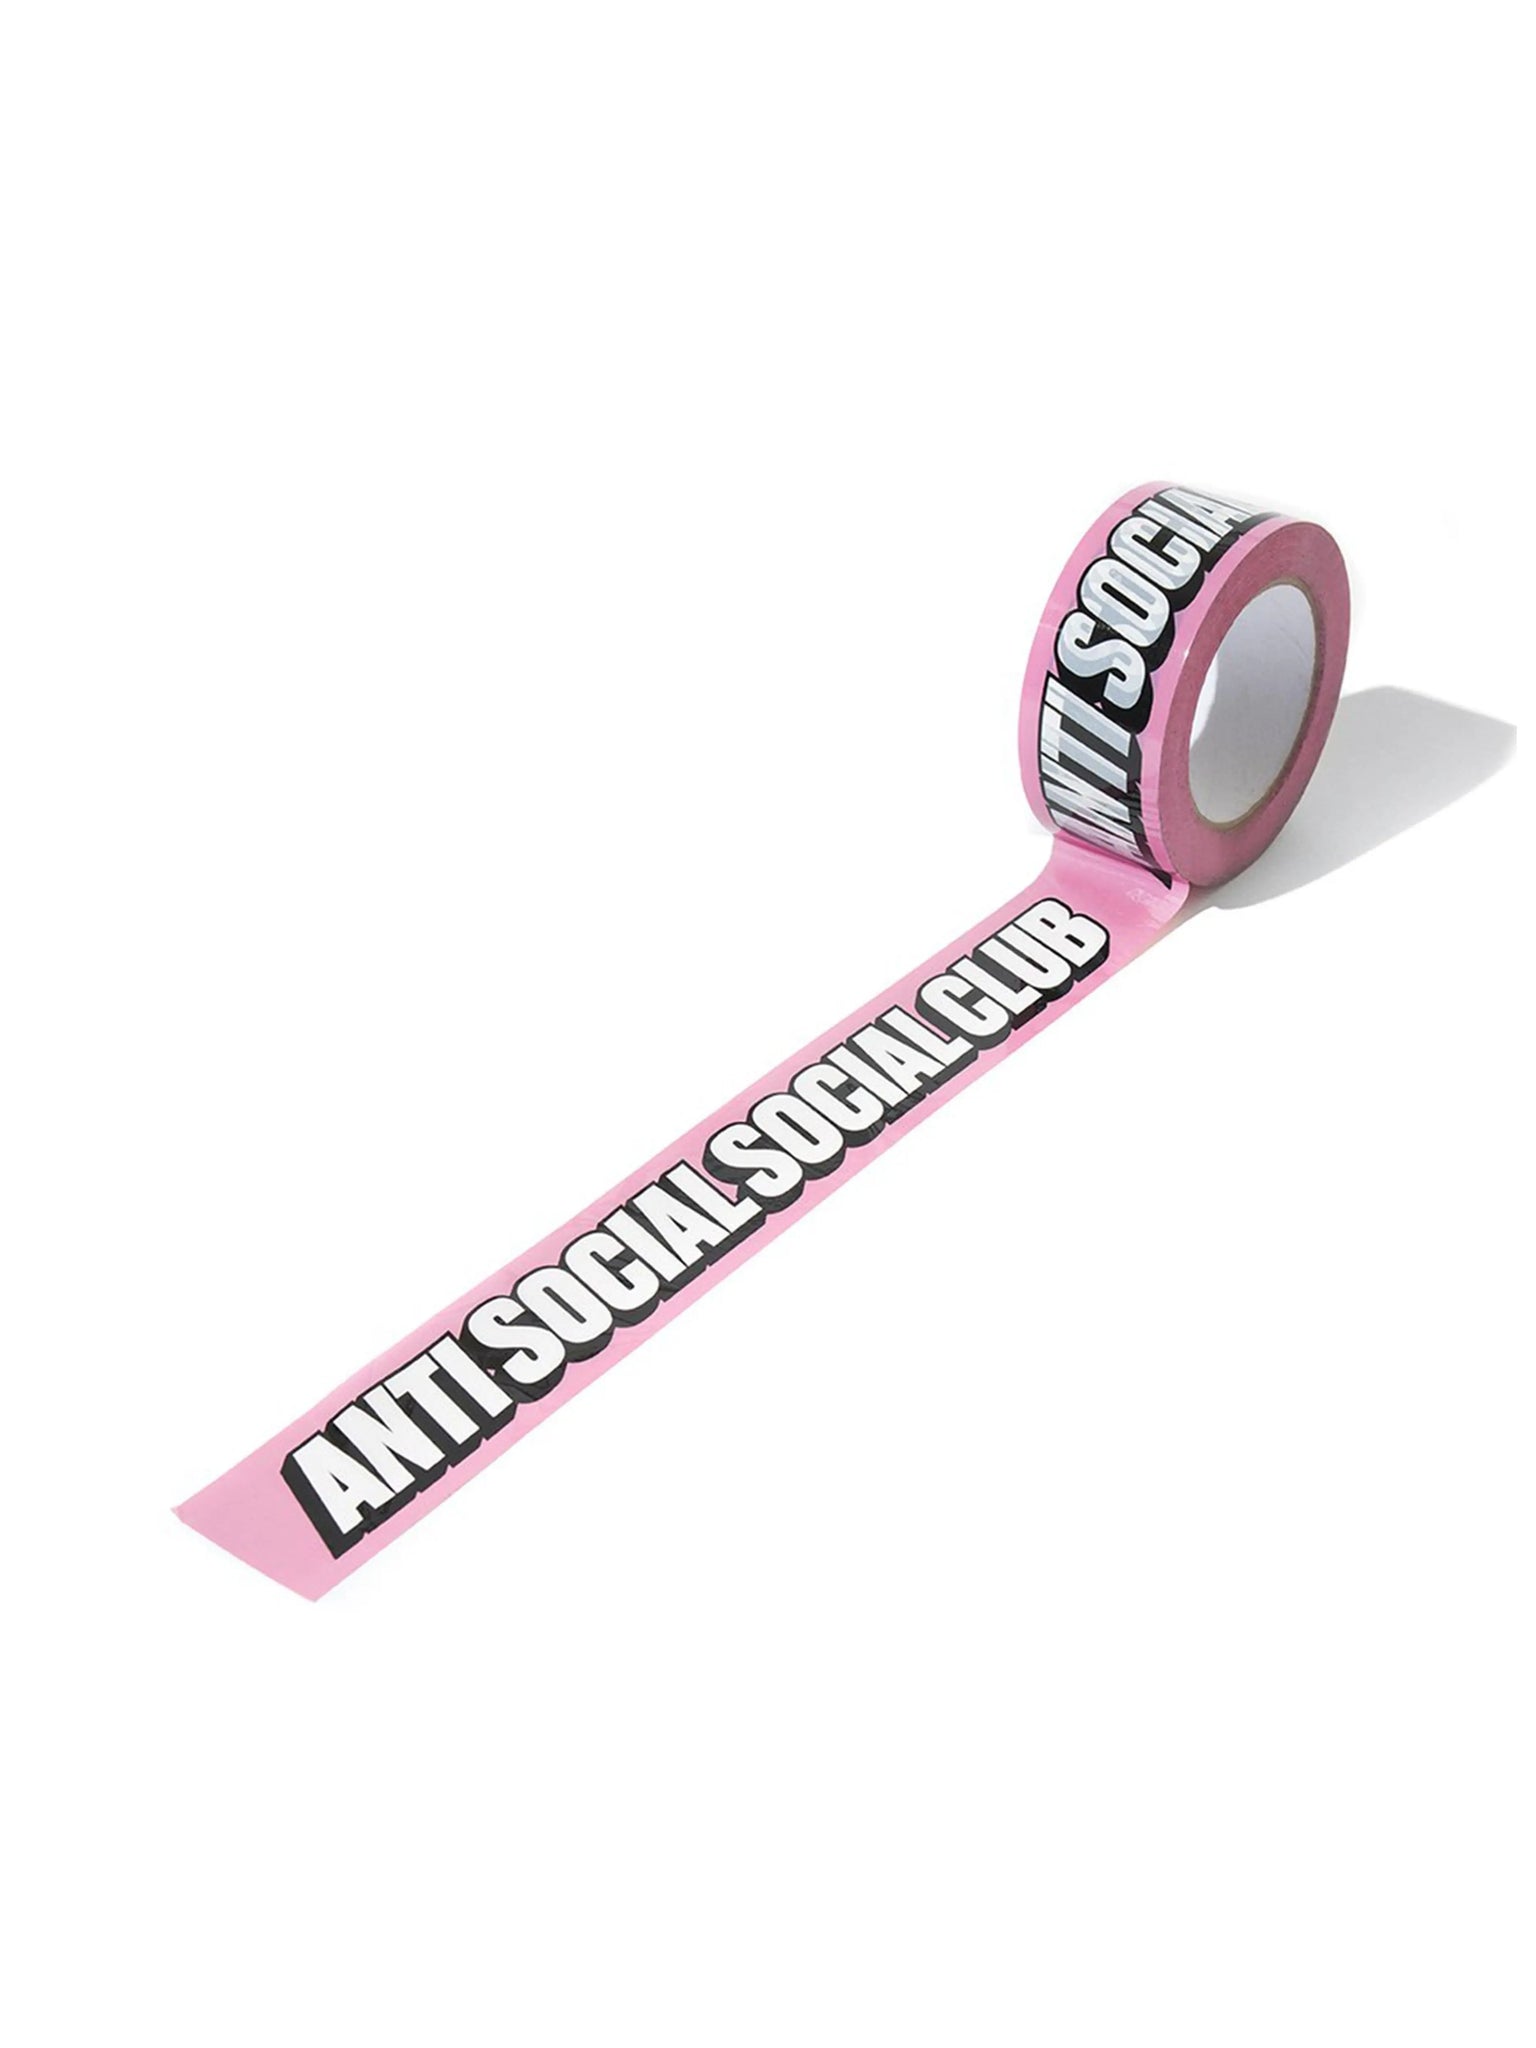 Anti Social Social Club "SMS" Tape Roll Pink Prior